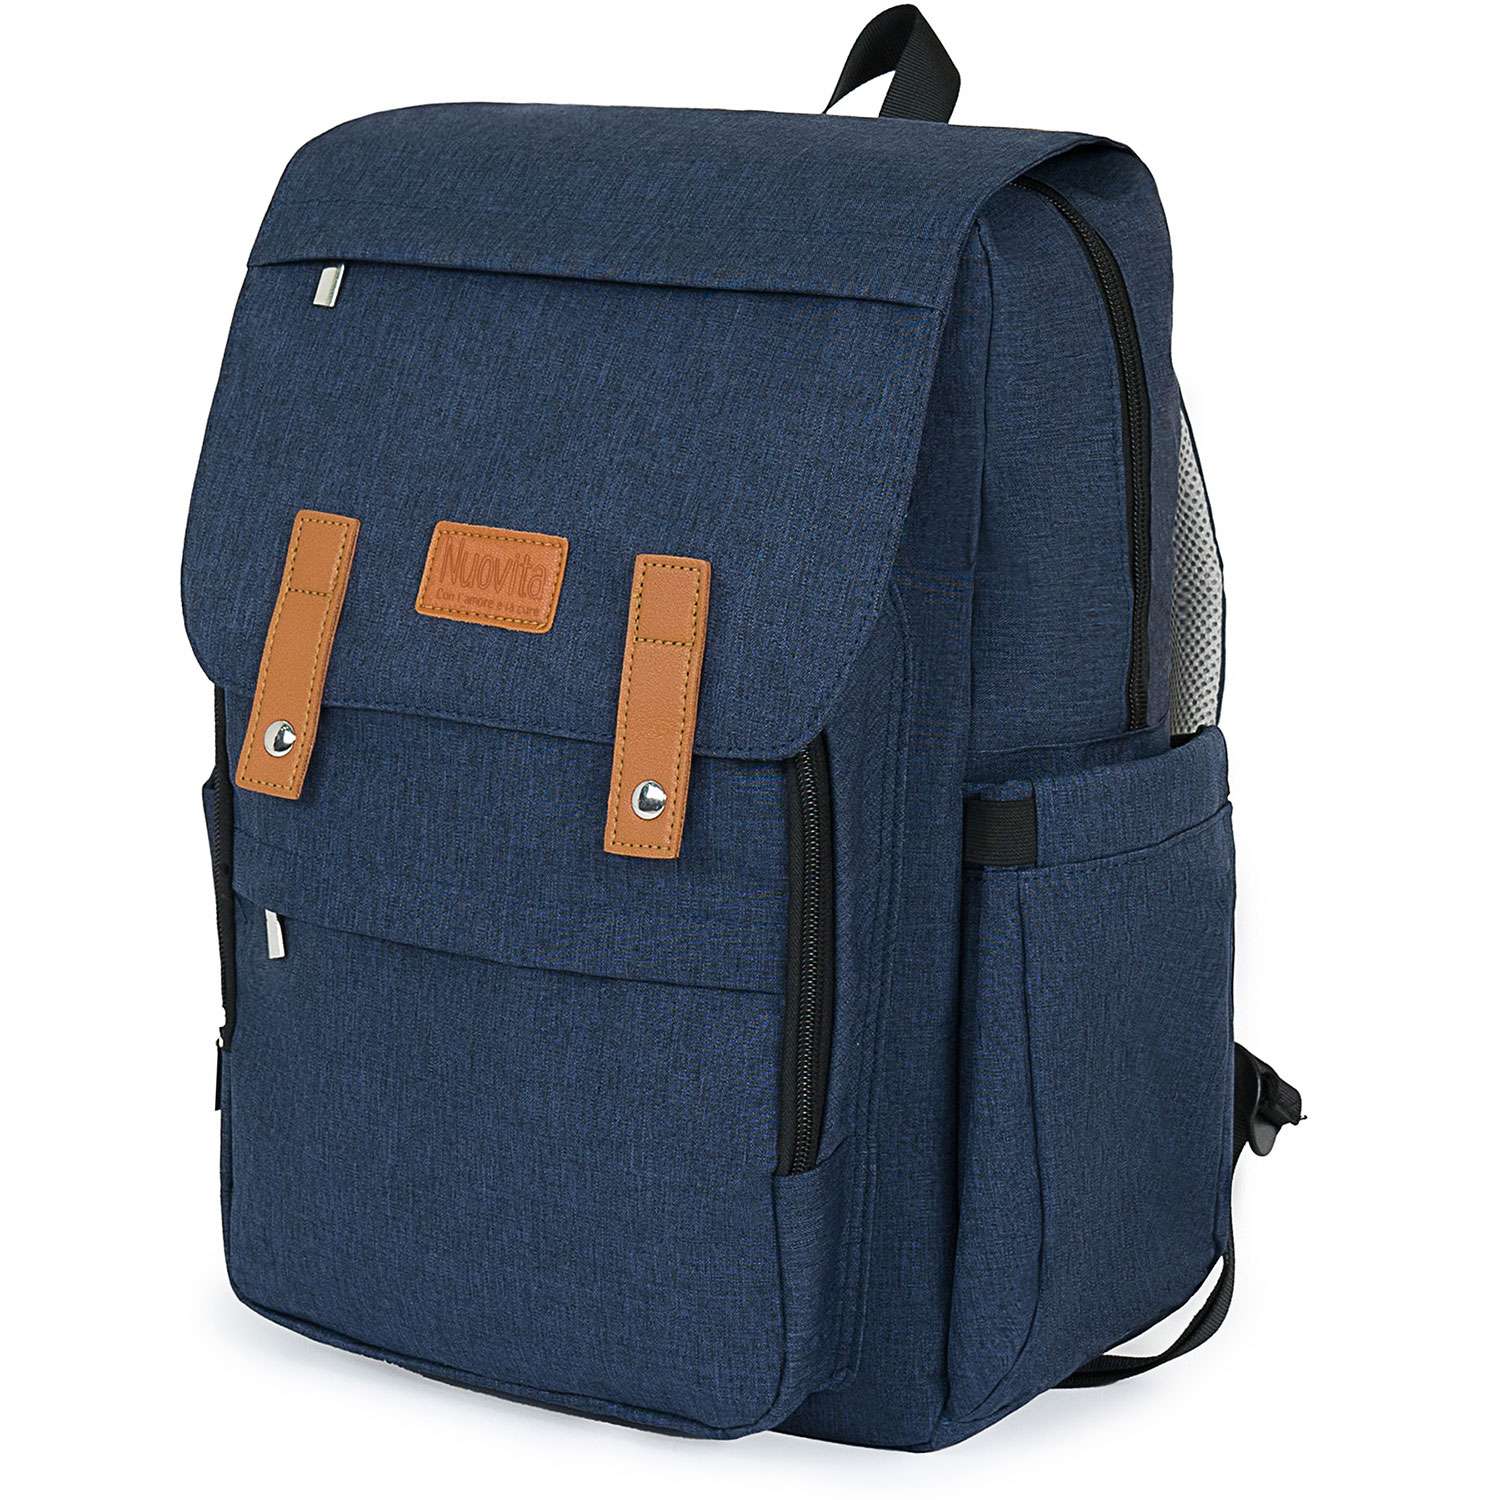 Рюкзак для мамы Nuovita Capcap hipster Темно-синий - фото 1